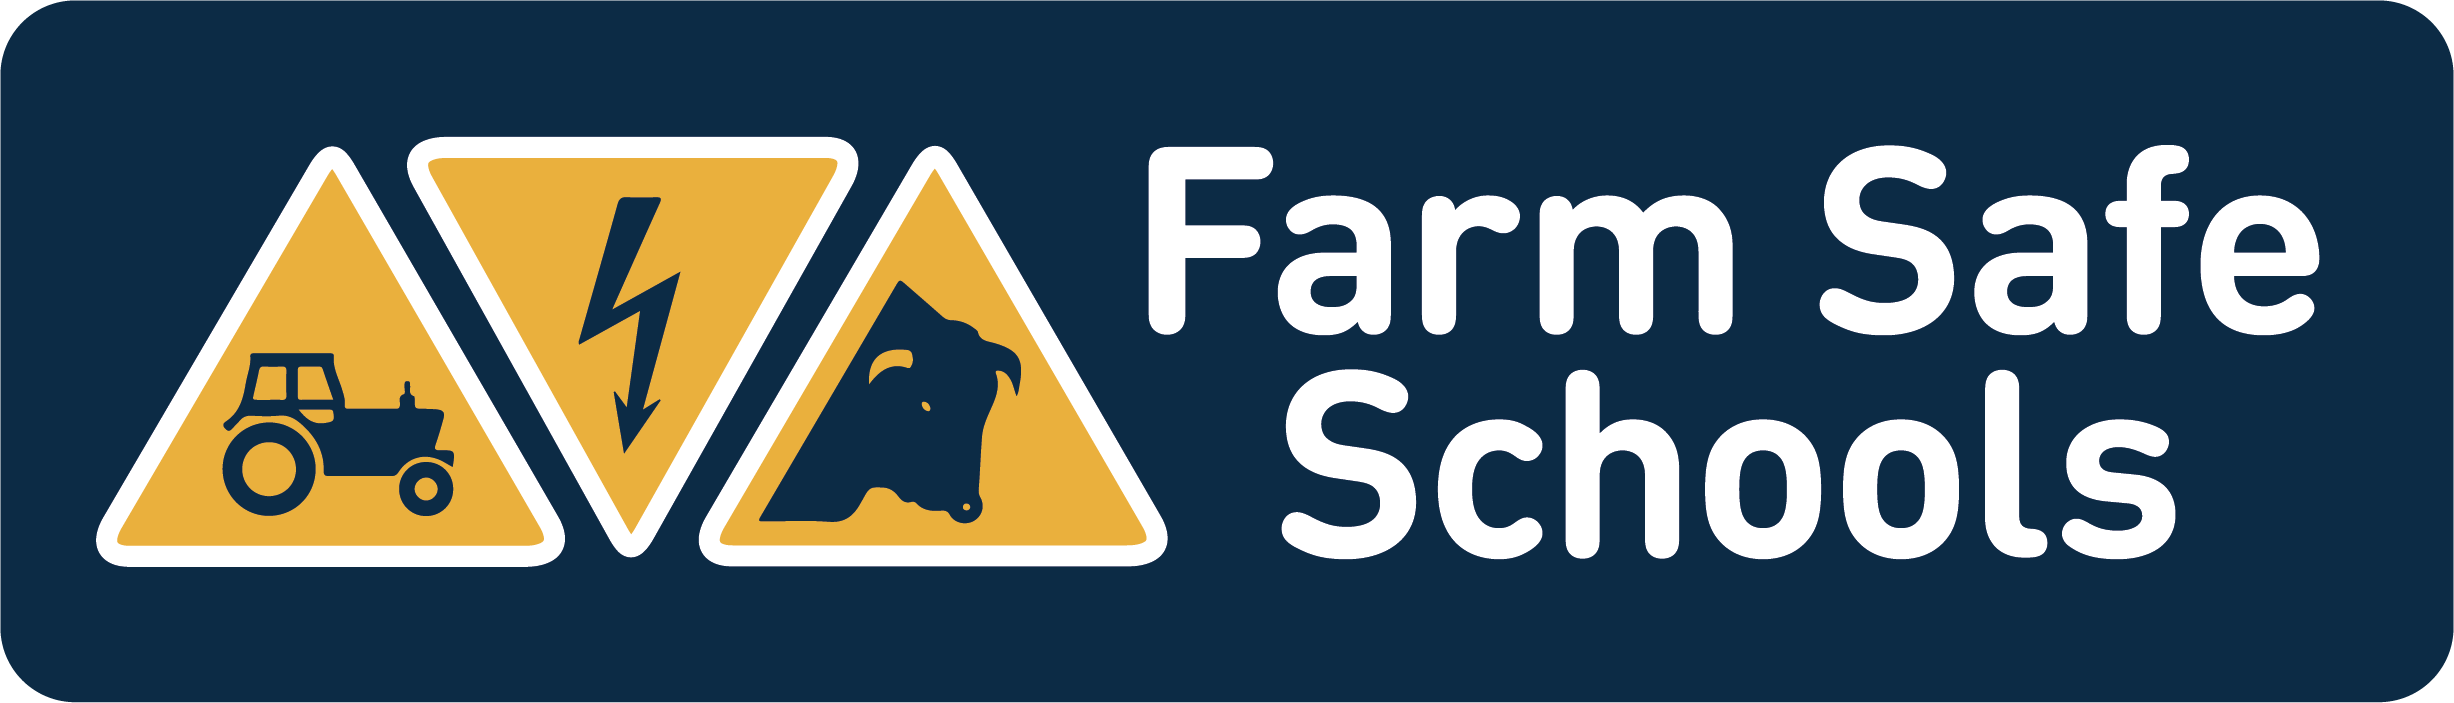 Farm Safe Schools